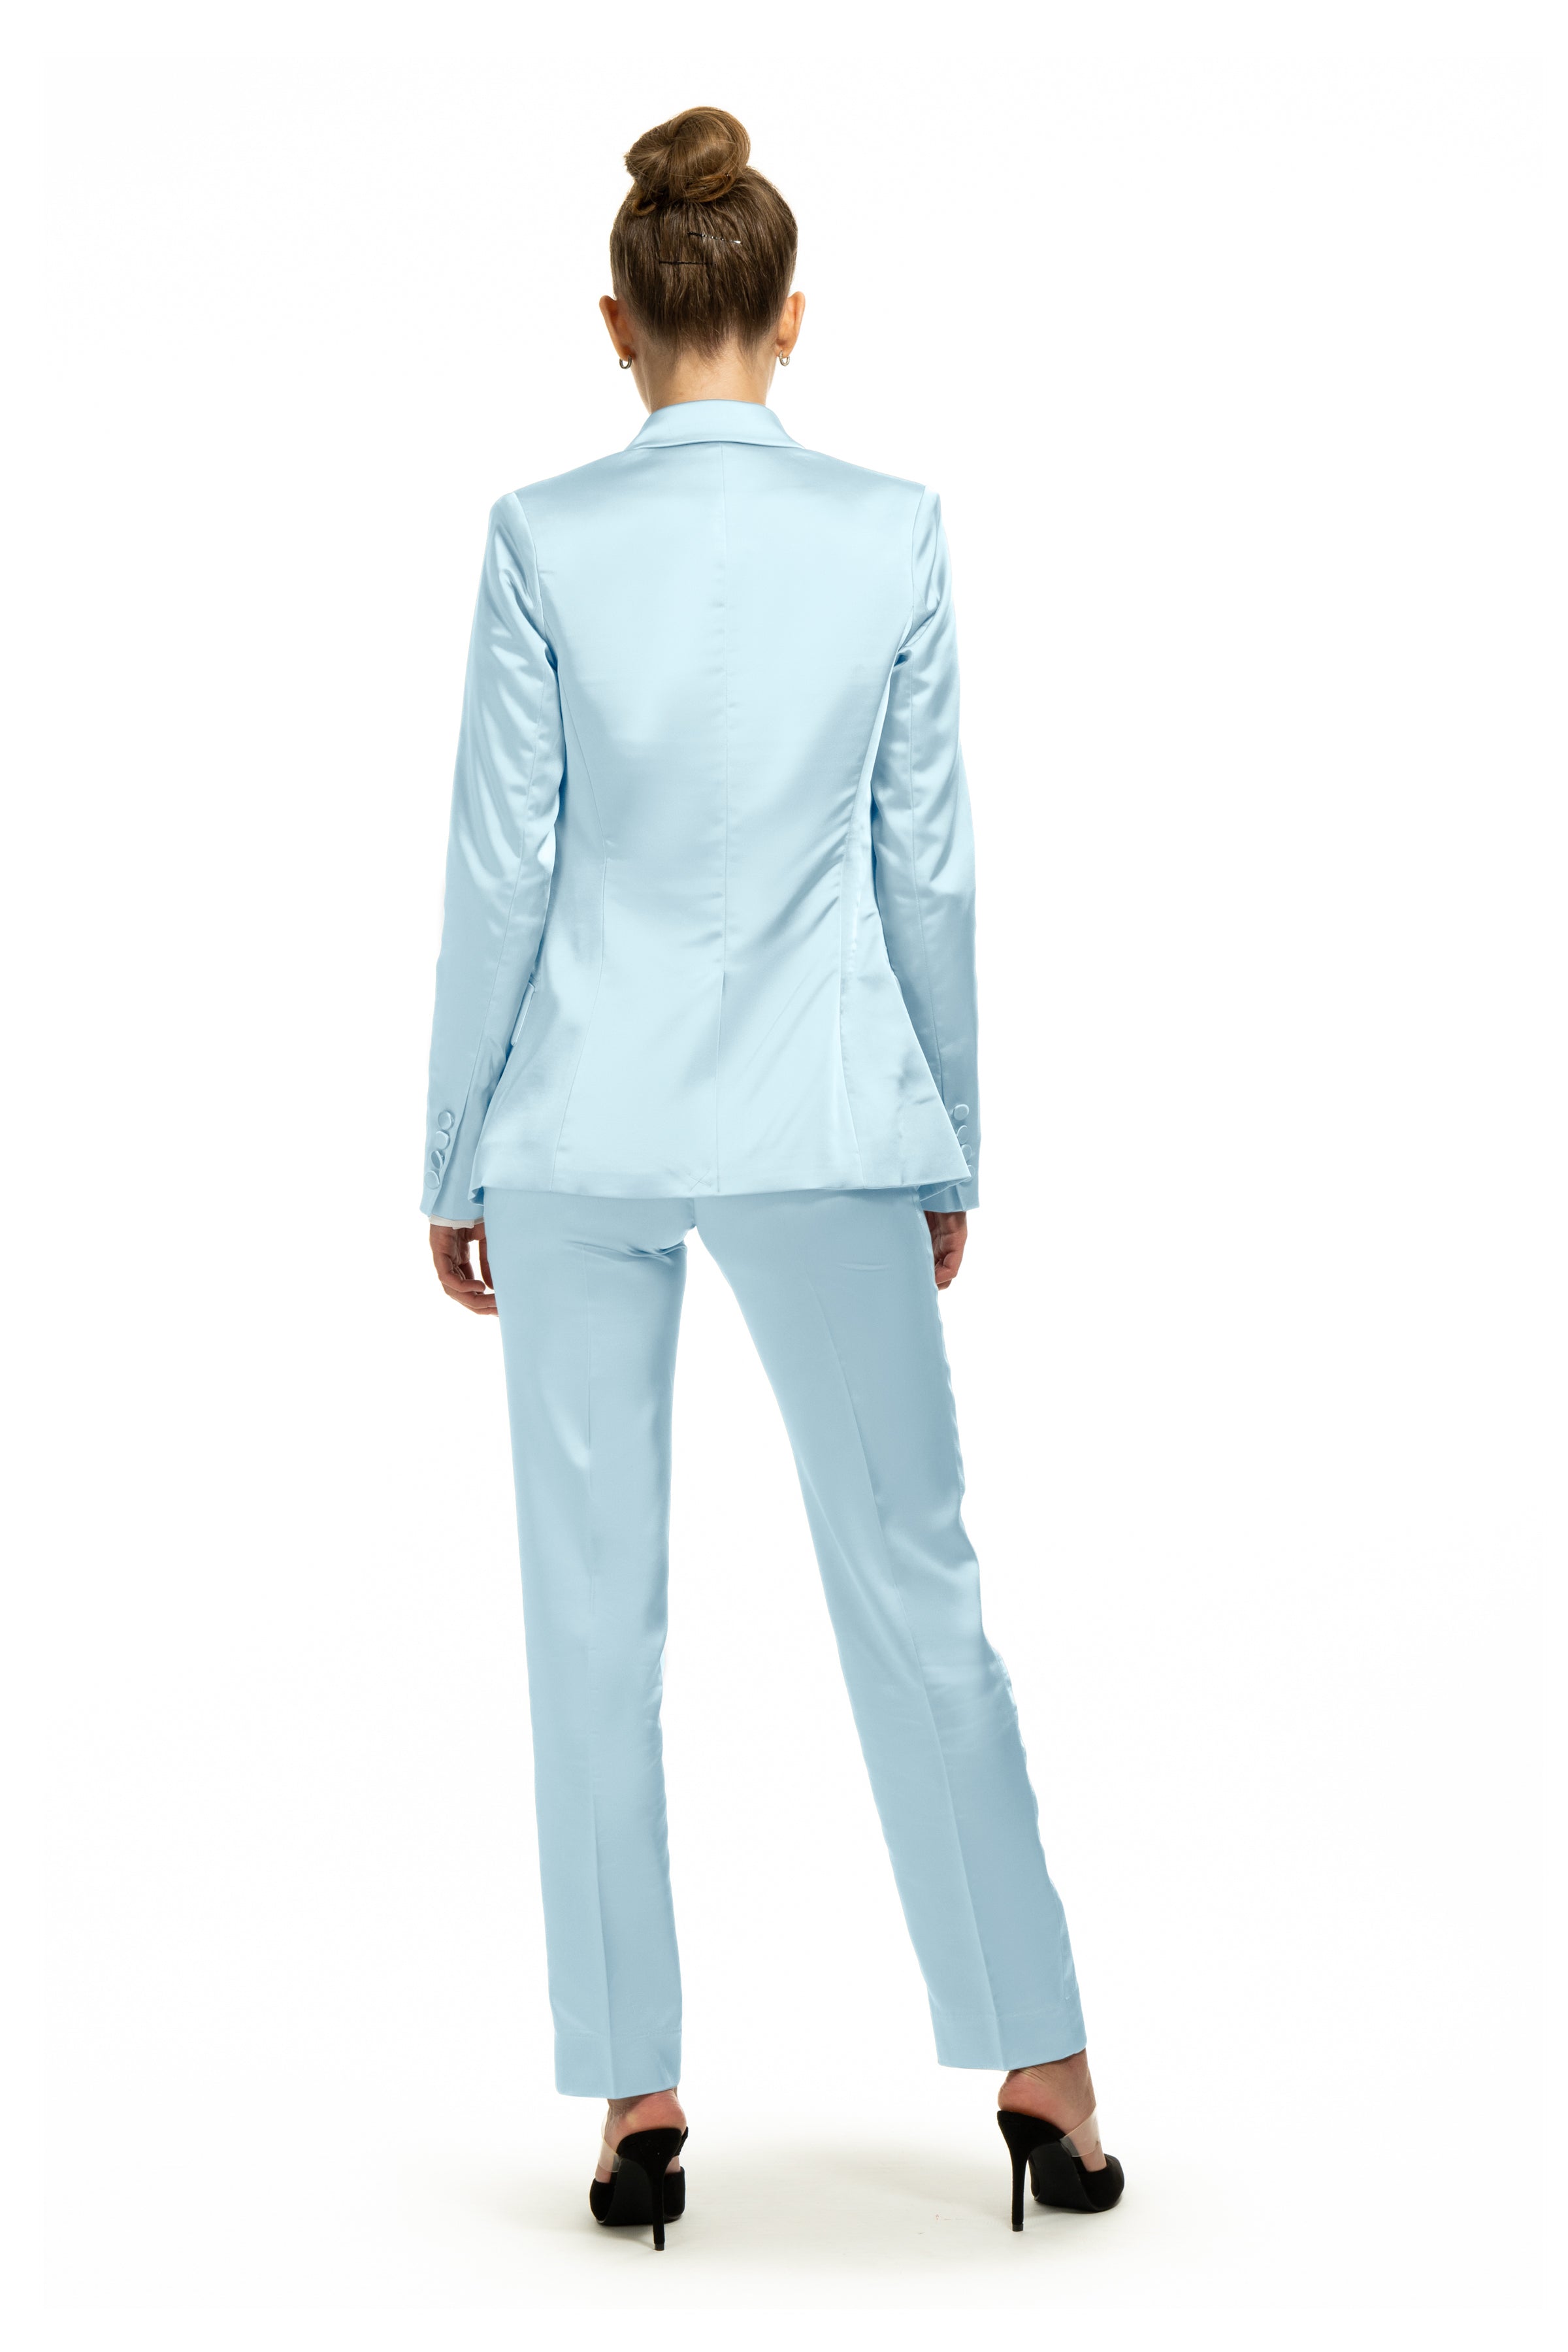 Buy Light Blue Formal Tuxedo Pant Suits Online for Women